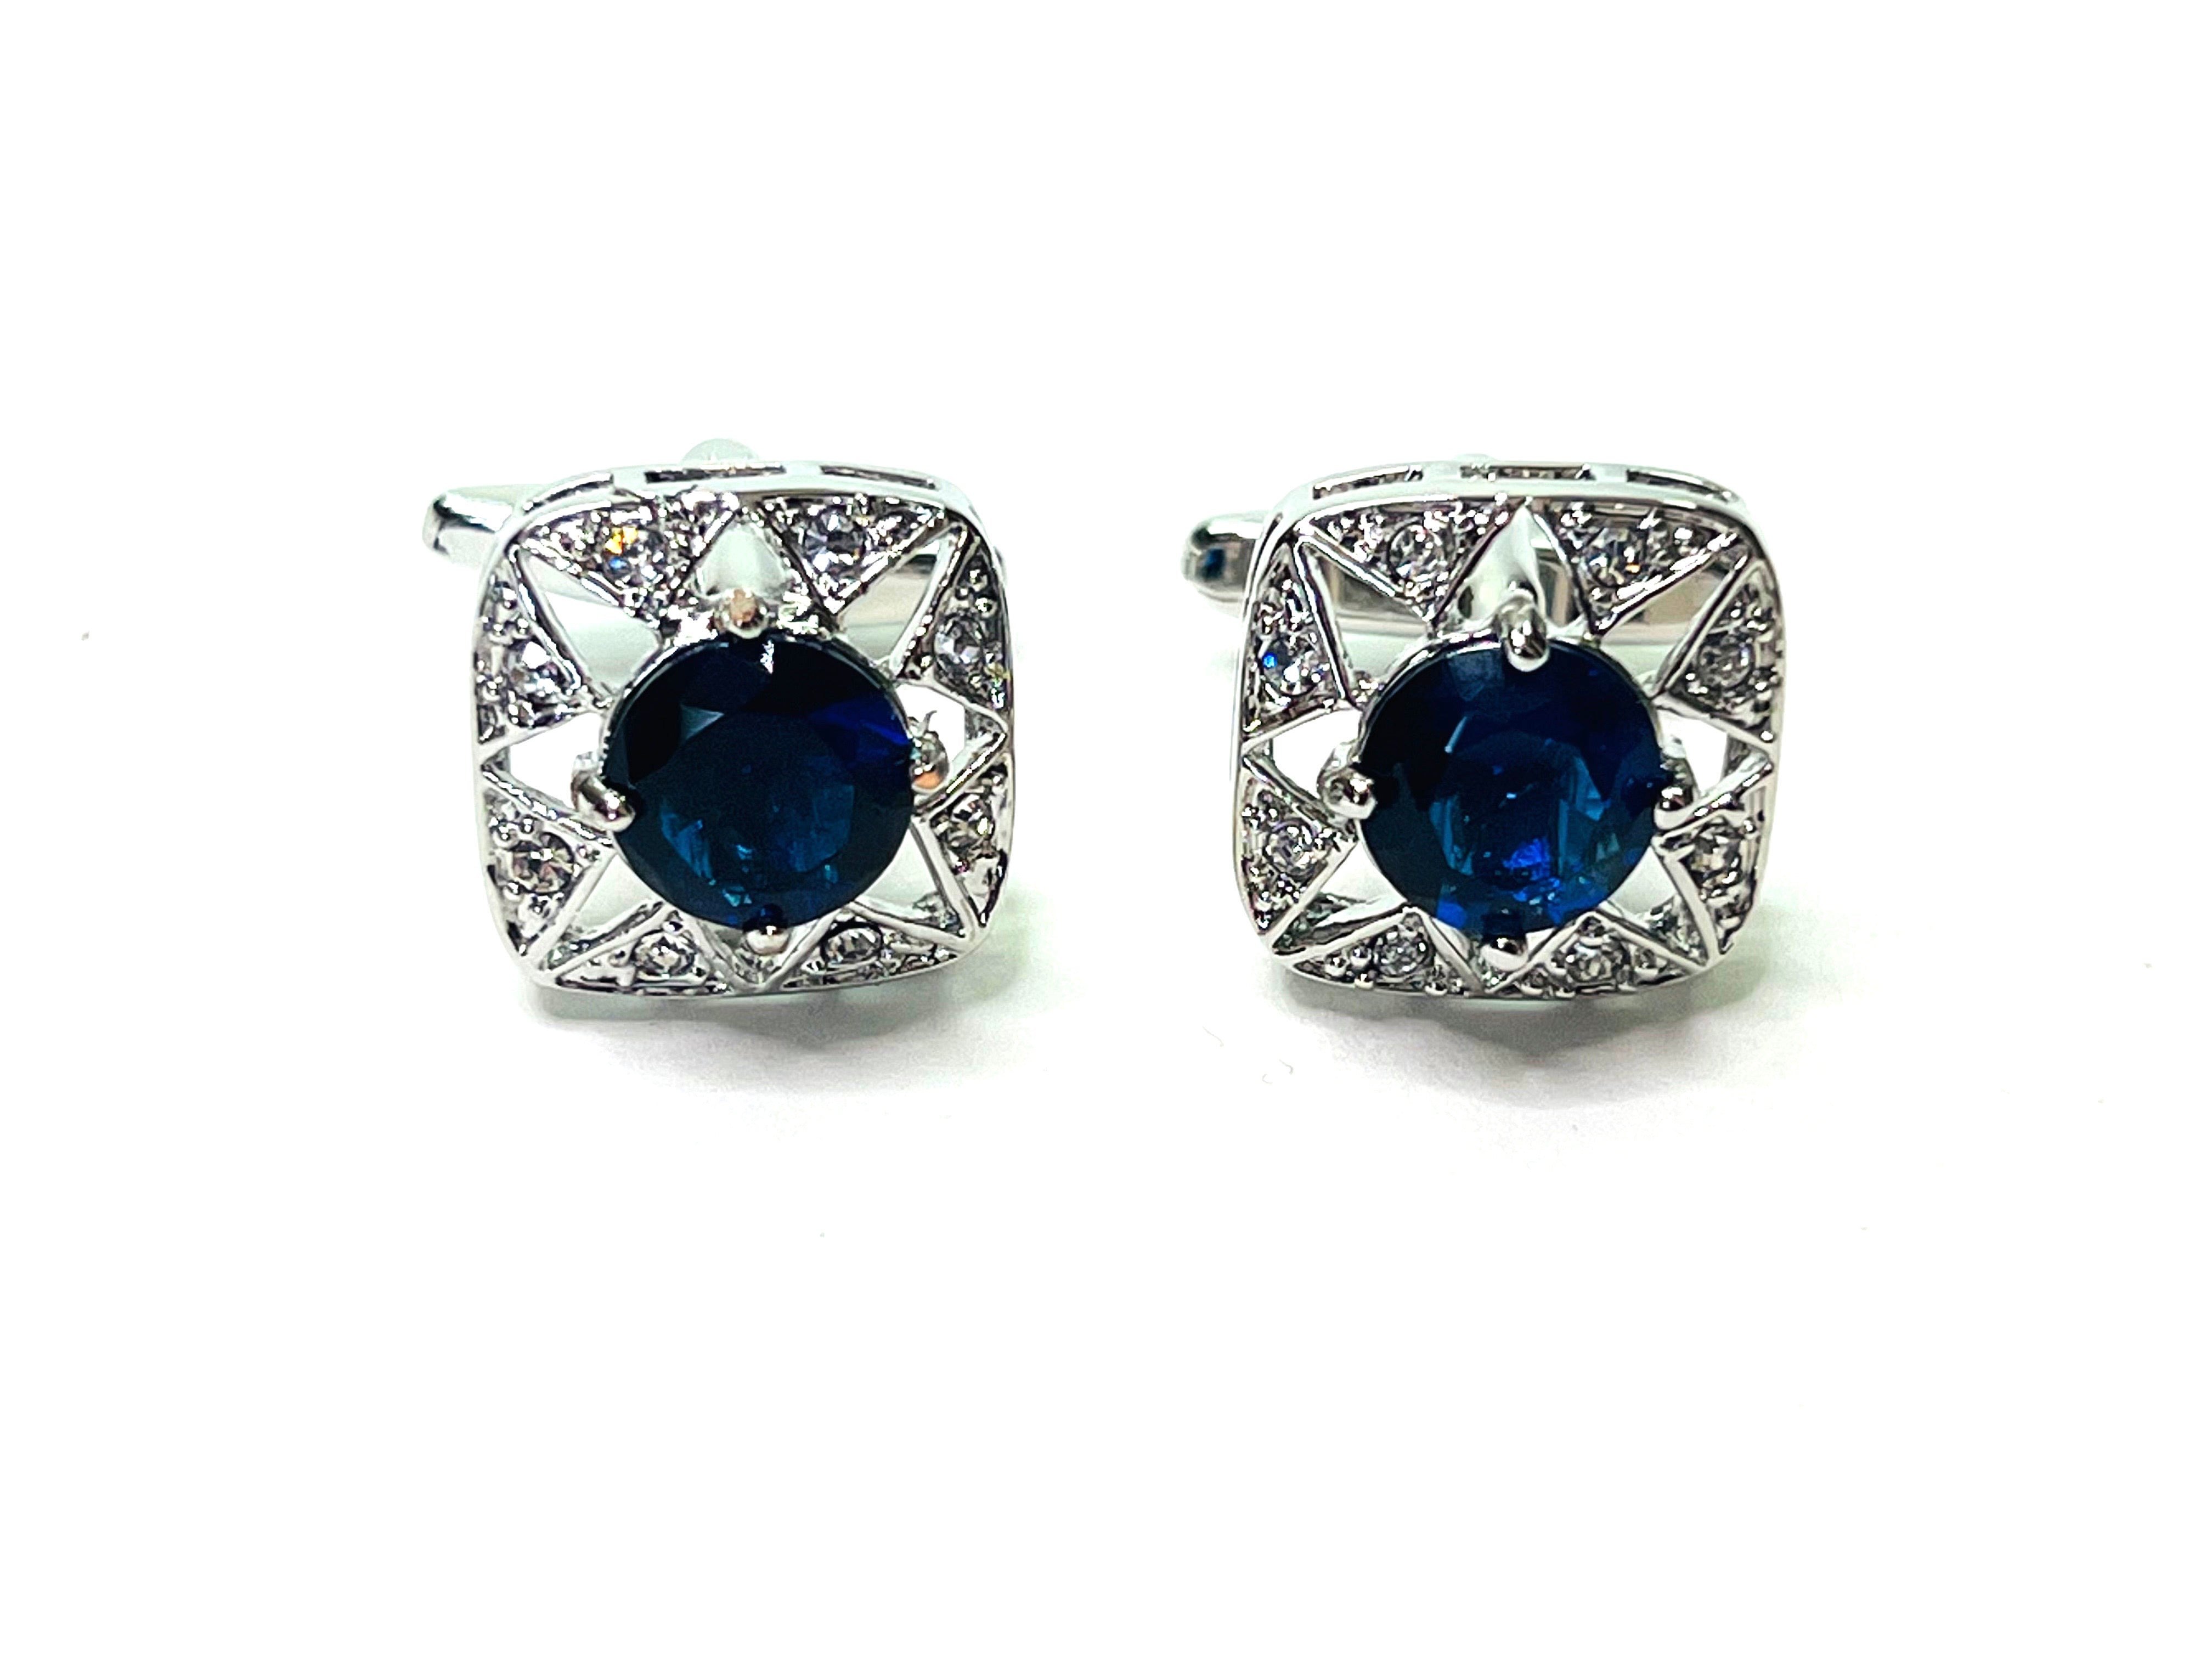 Blue Rhinestone Cufflinks - Jewellery Unique Gifts & Accessories